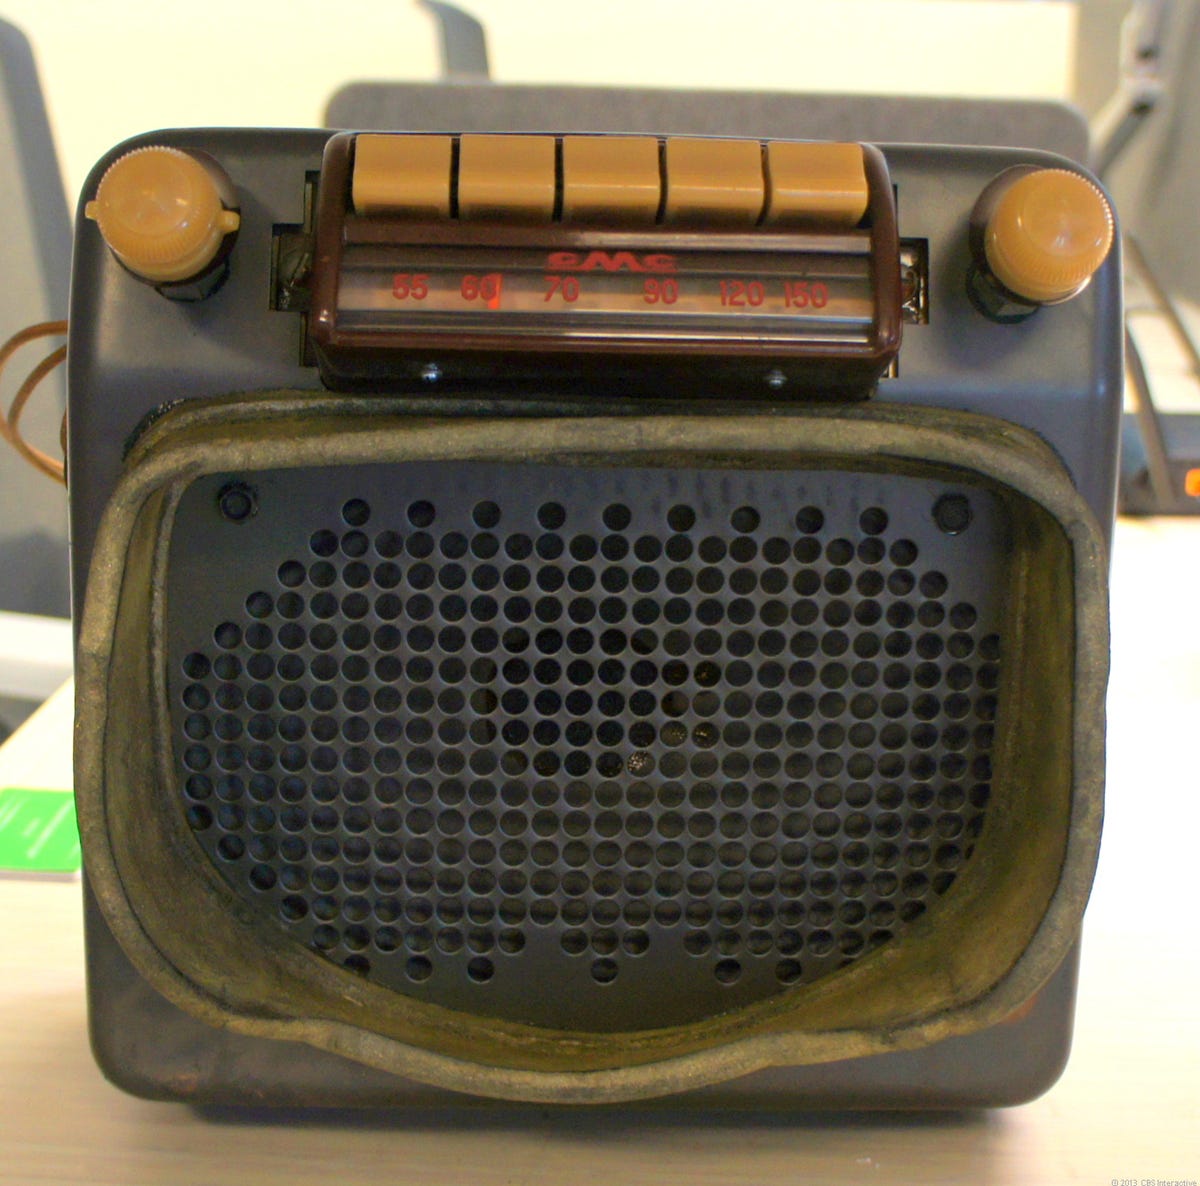 Delphi_radios-004.jpg